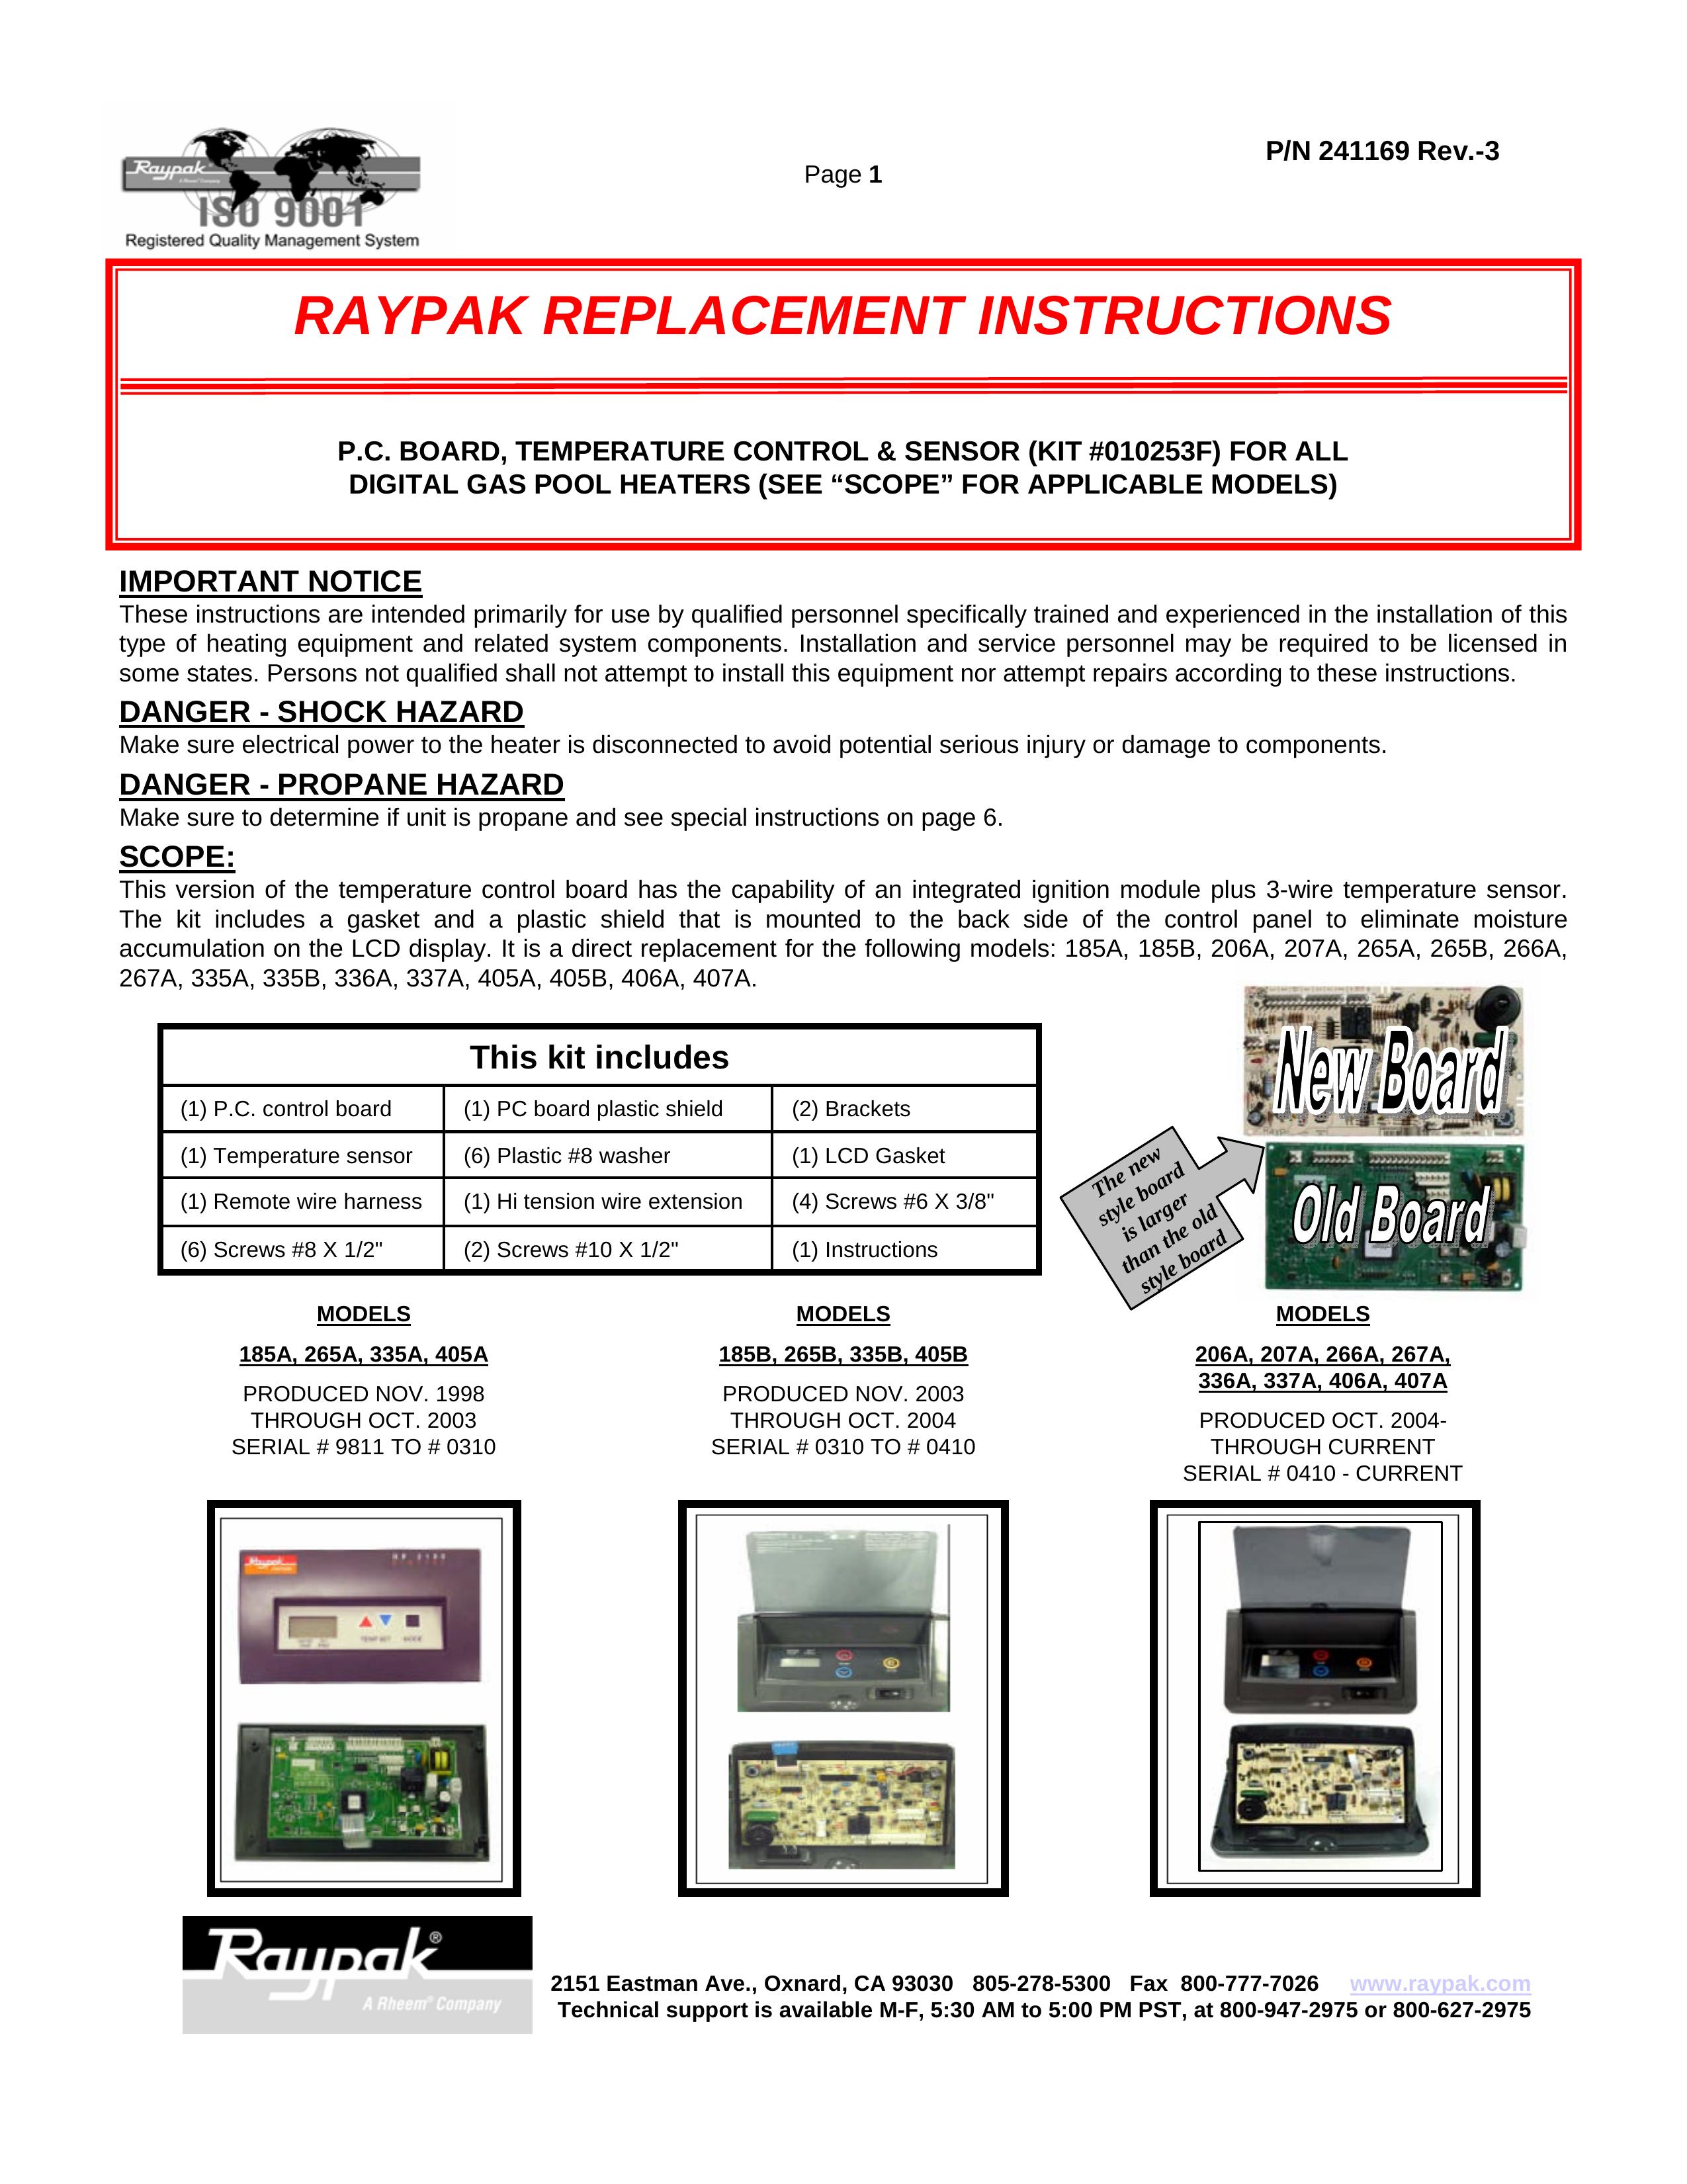 Raypak 185A Swimming Pool Heater User Manual